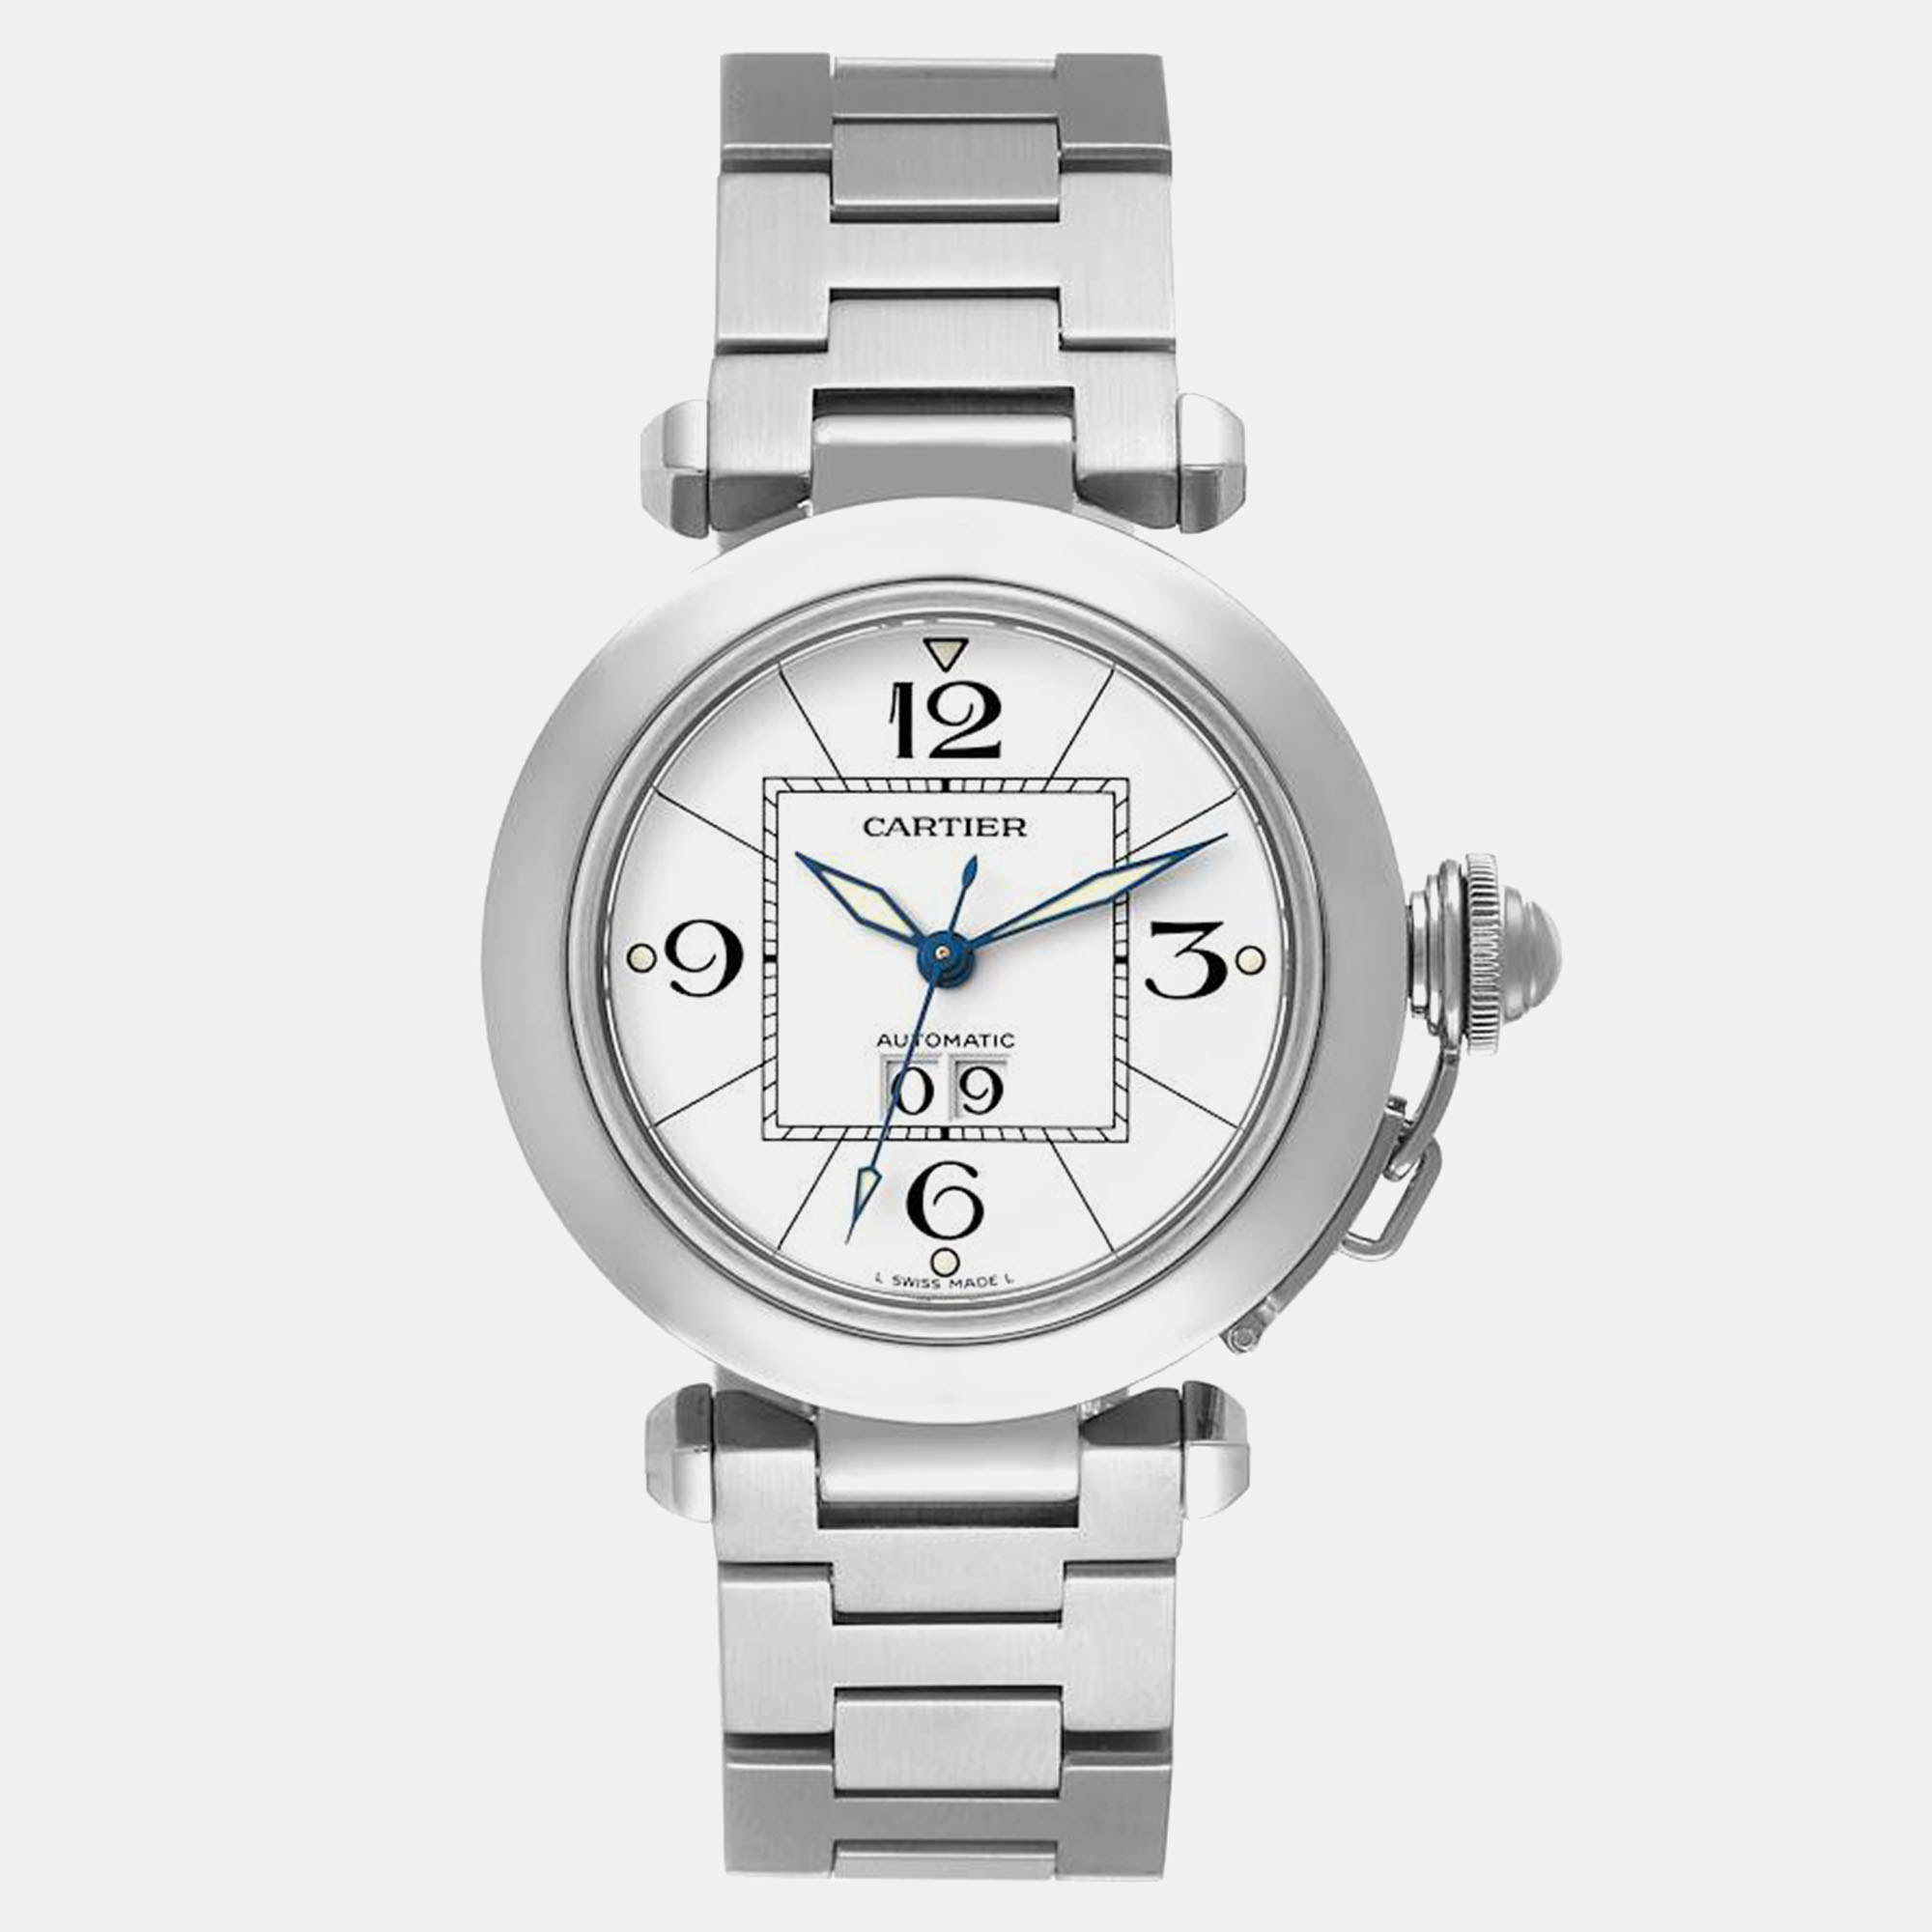 Cartier pasha c big date midsize steel white dial mens watch w31055m7